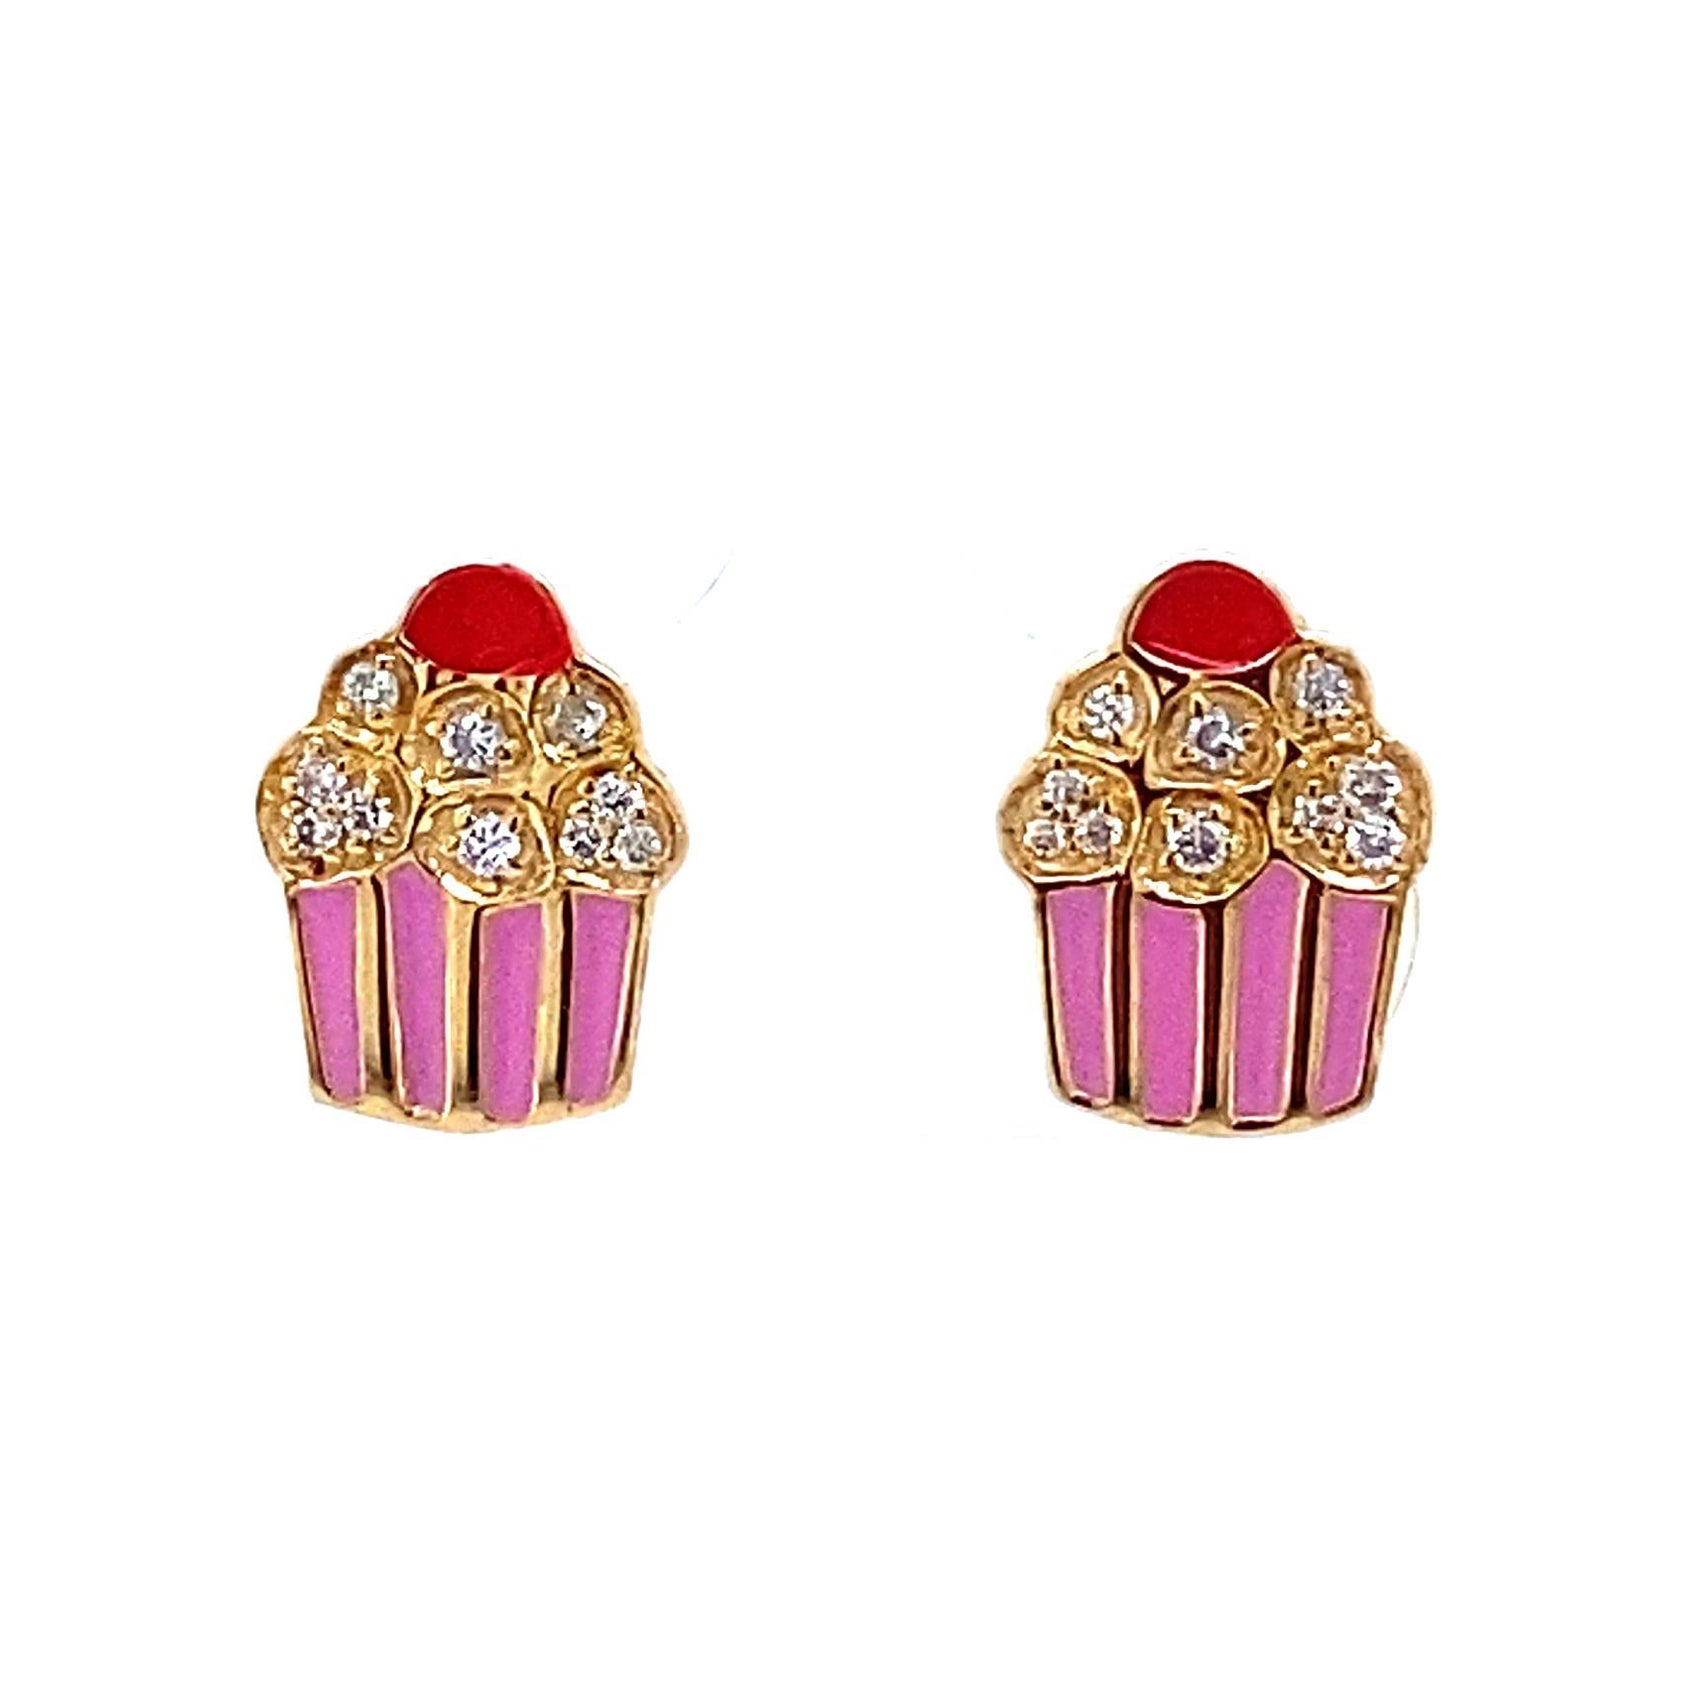 Cute Enameled Cupcake Diamond Earrings for Girls/Kids/Toddlers in 18K Solid Gold